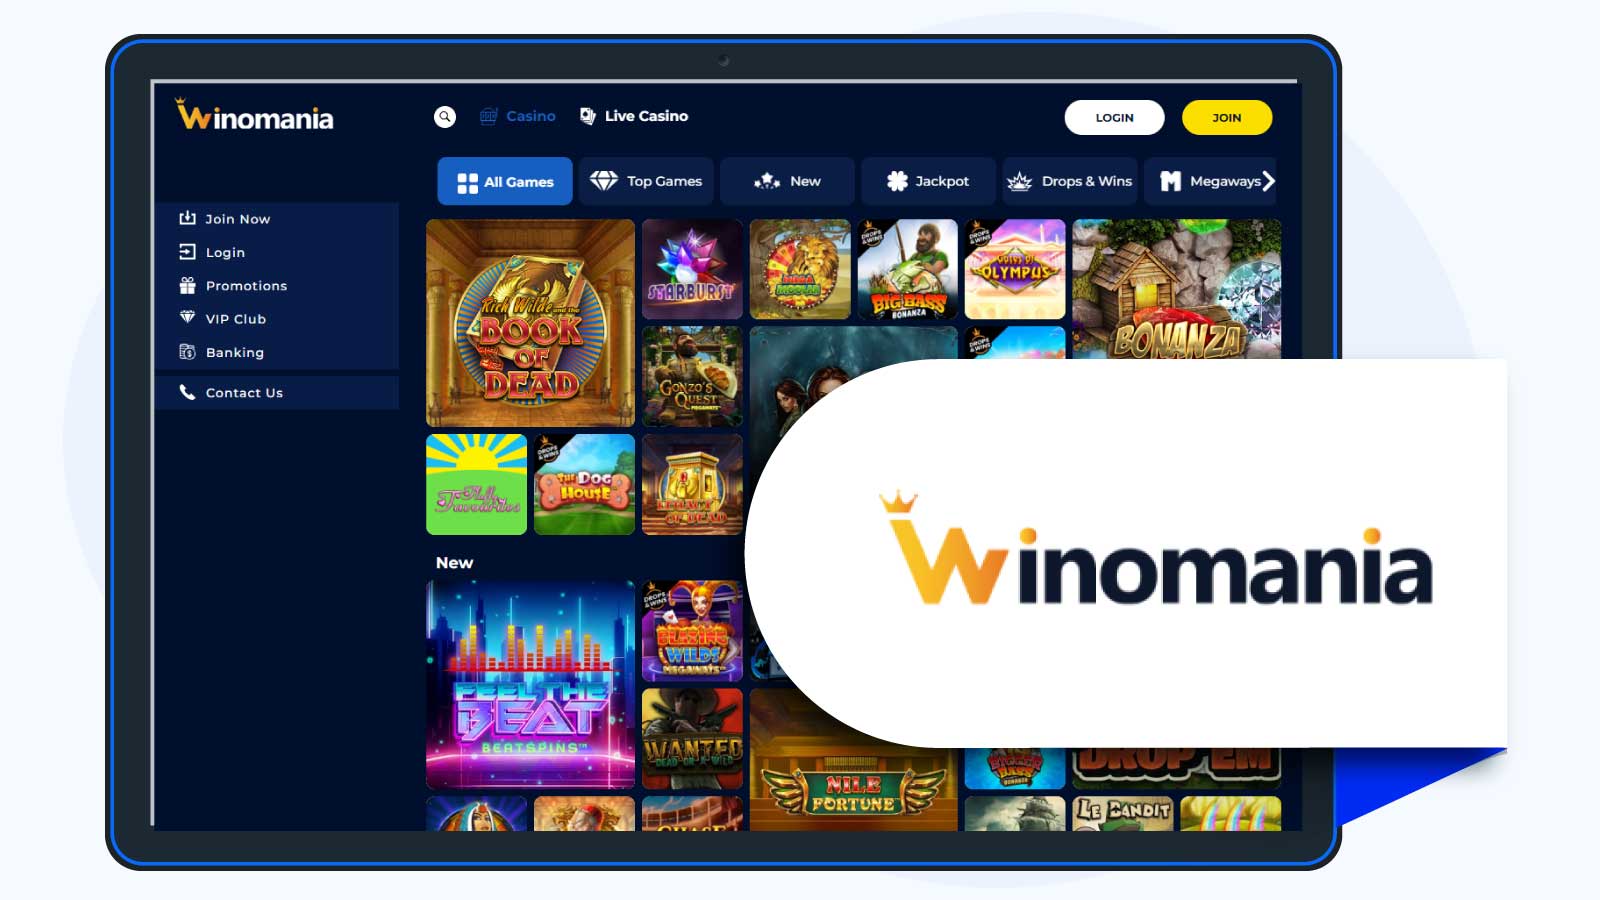 Winomania Casino – Popular PayPal Casino for No Wager Bonuses